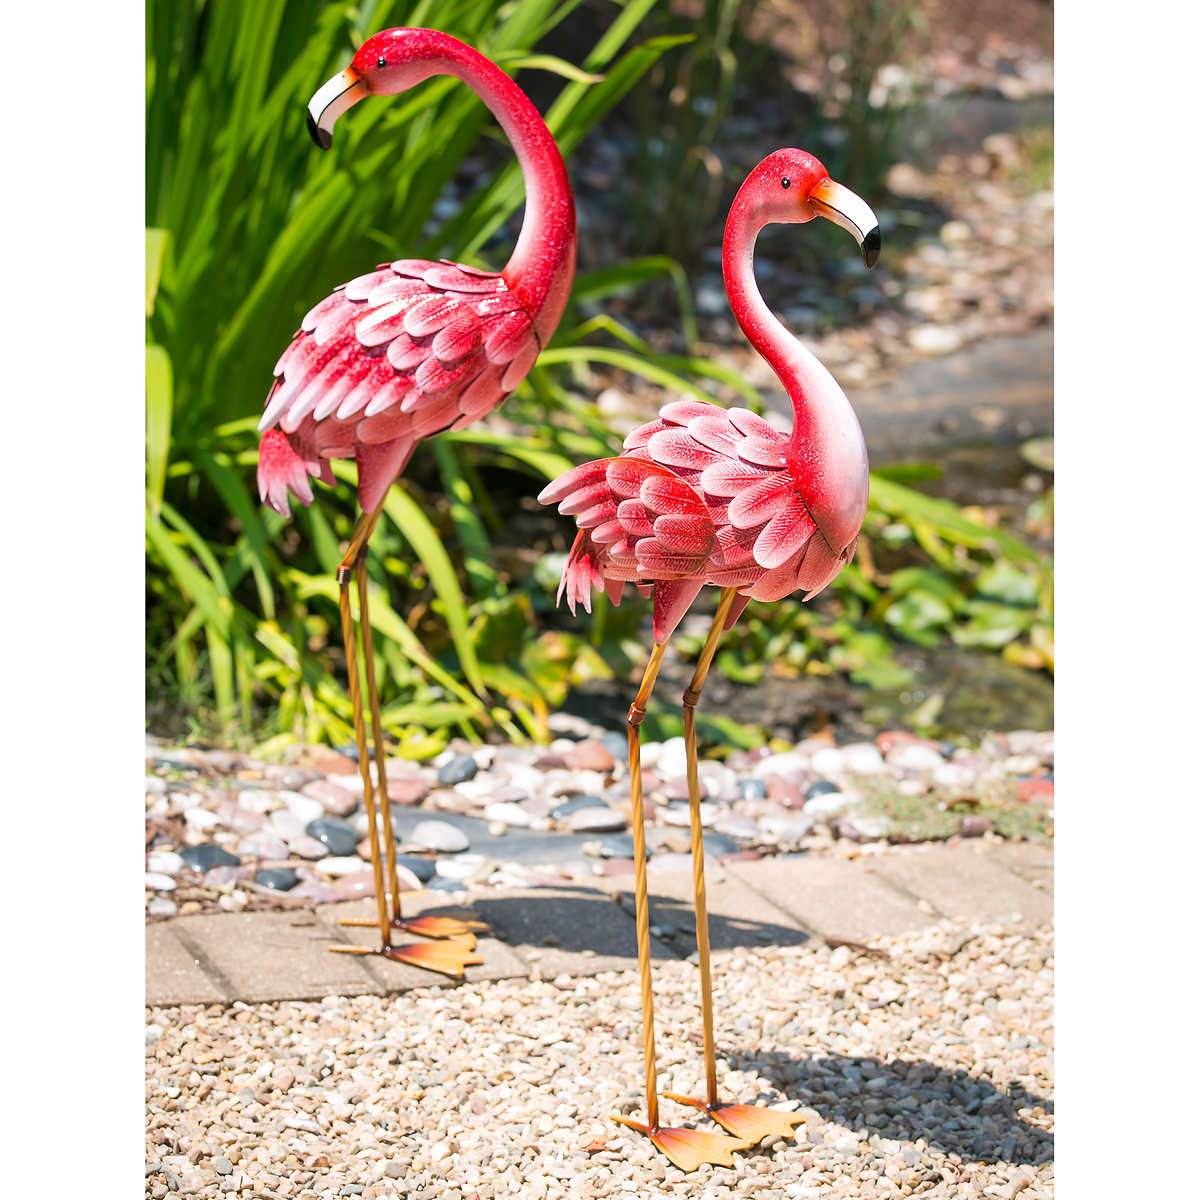 Solar Ground Spike Light Flamingo Lawn Lamp Outdoor Garden Decor Lights Pink US 